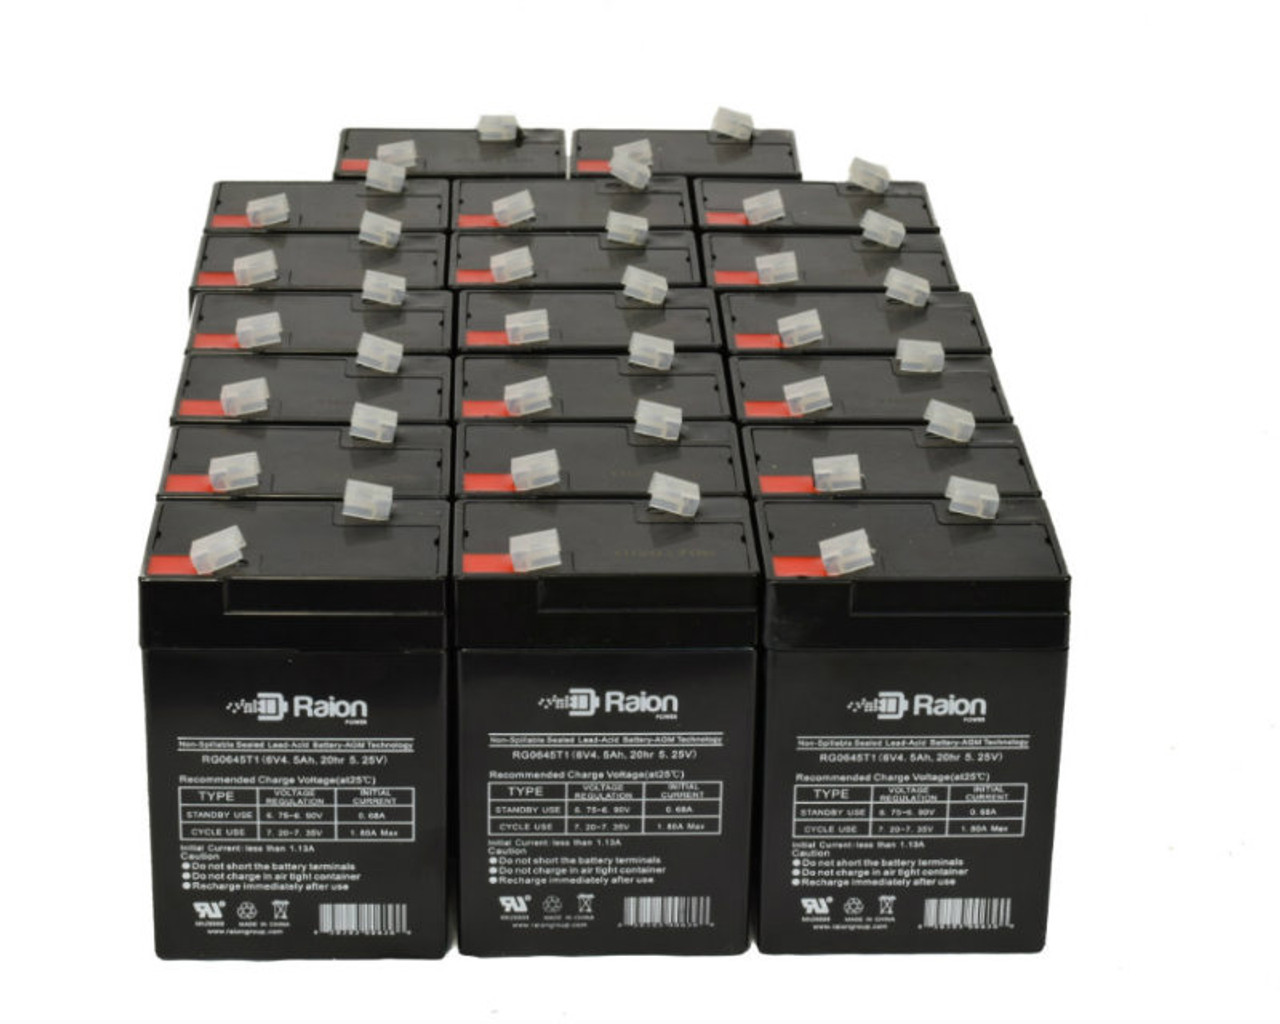 Raion Power 6 Volt 4.5Ah RG0645T1 Replacement Battery for Sonnenschein M126 - 20 Pack